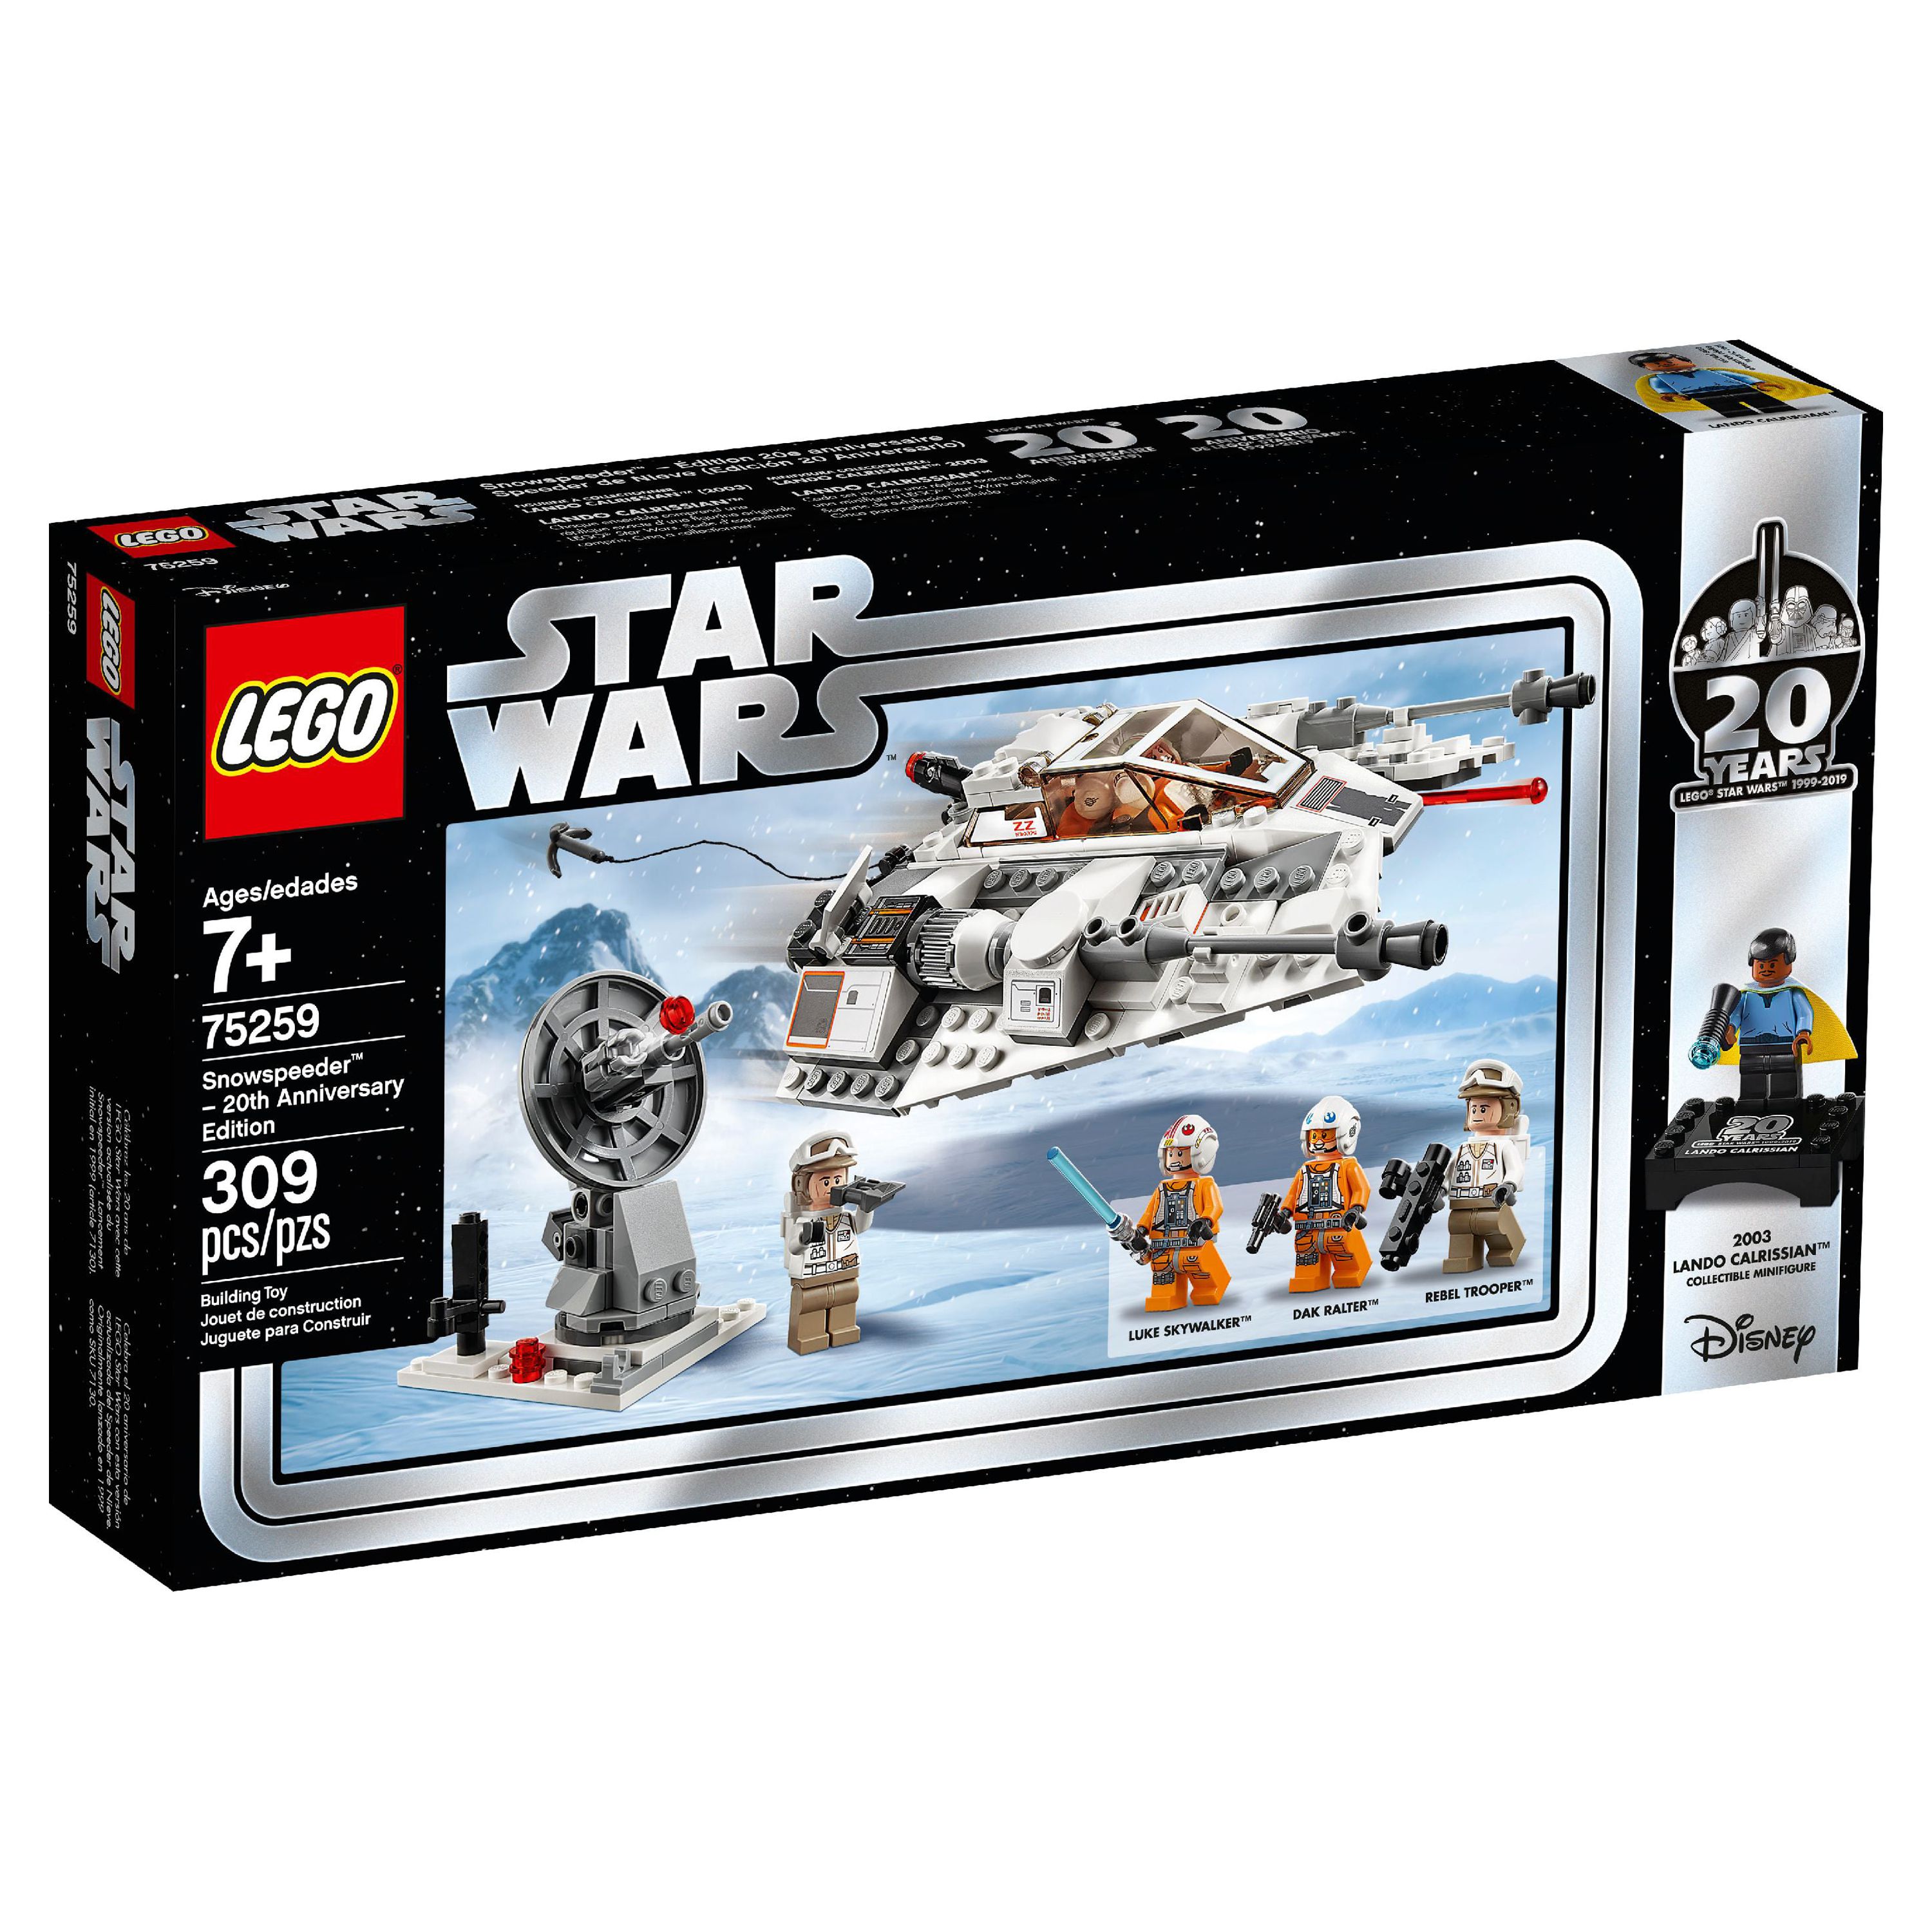 LEGO Star Wars 20th Anniversary Edition Snowspeeder Vehicle Model 75259 - image 5 of 8